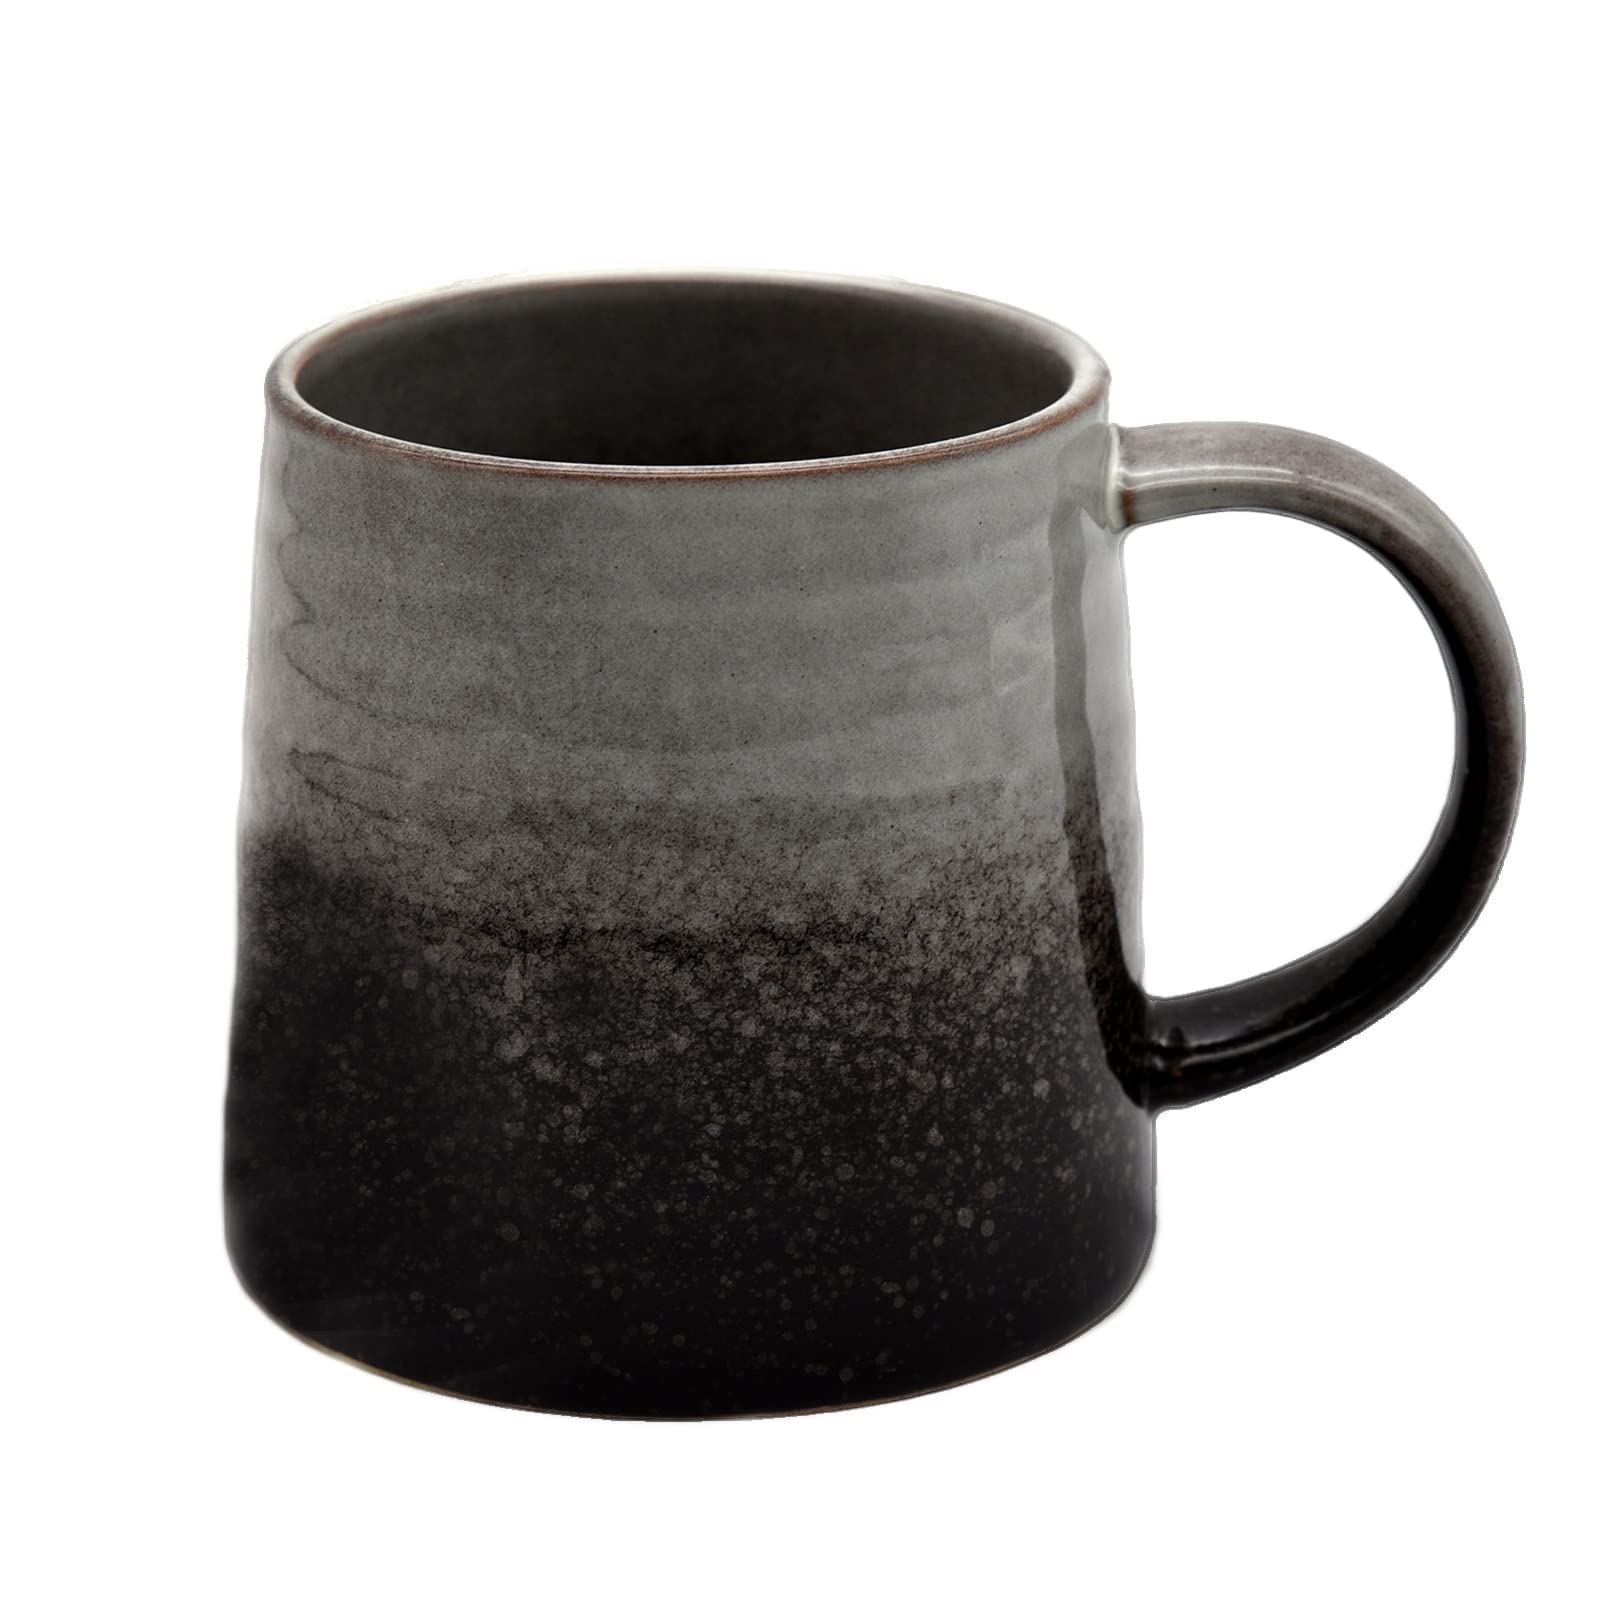 wewlink Large Ceramic Coffee Mug, Pottery Mug,Tea Cup for Office and Home,Handmade Pottery Coffee Mugs,16.5 Oz,Dishwasher and Microwave Safe,kiln altered glaze craft (Black White)